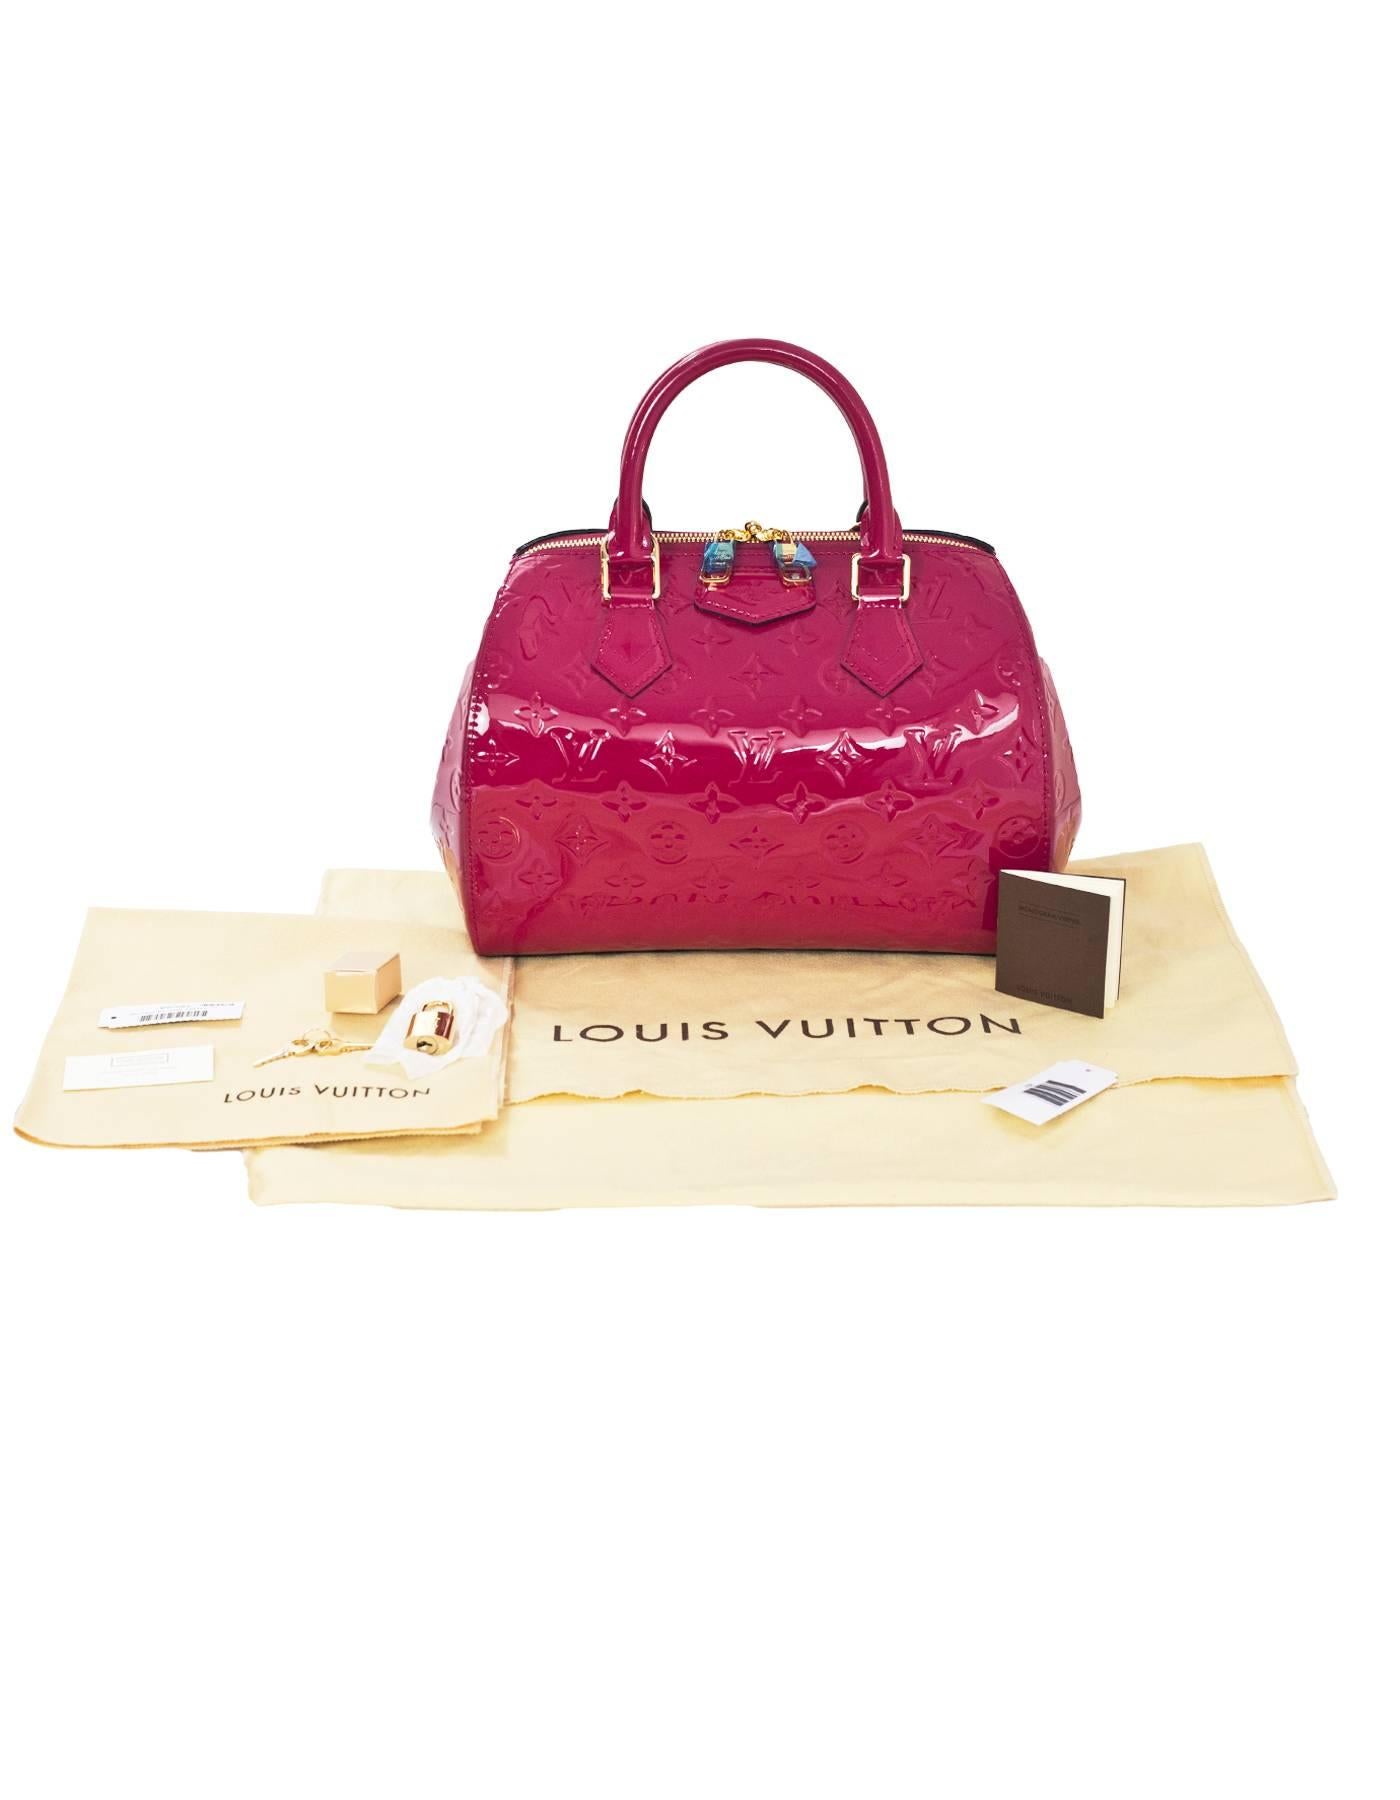 Louis Vuitton Indian Rose Pink Monogram Vernis Montana Bag with DB 2